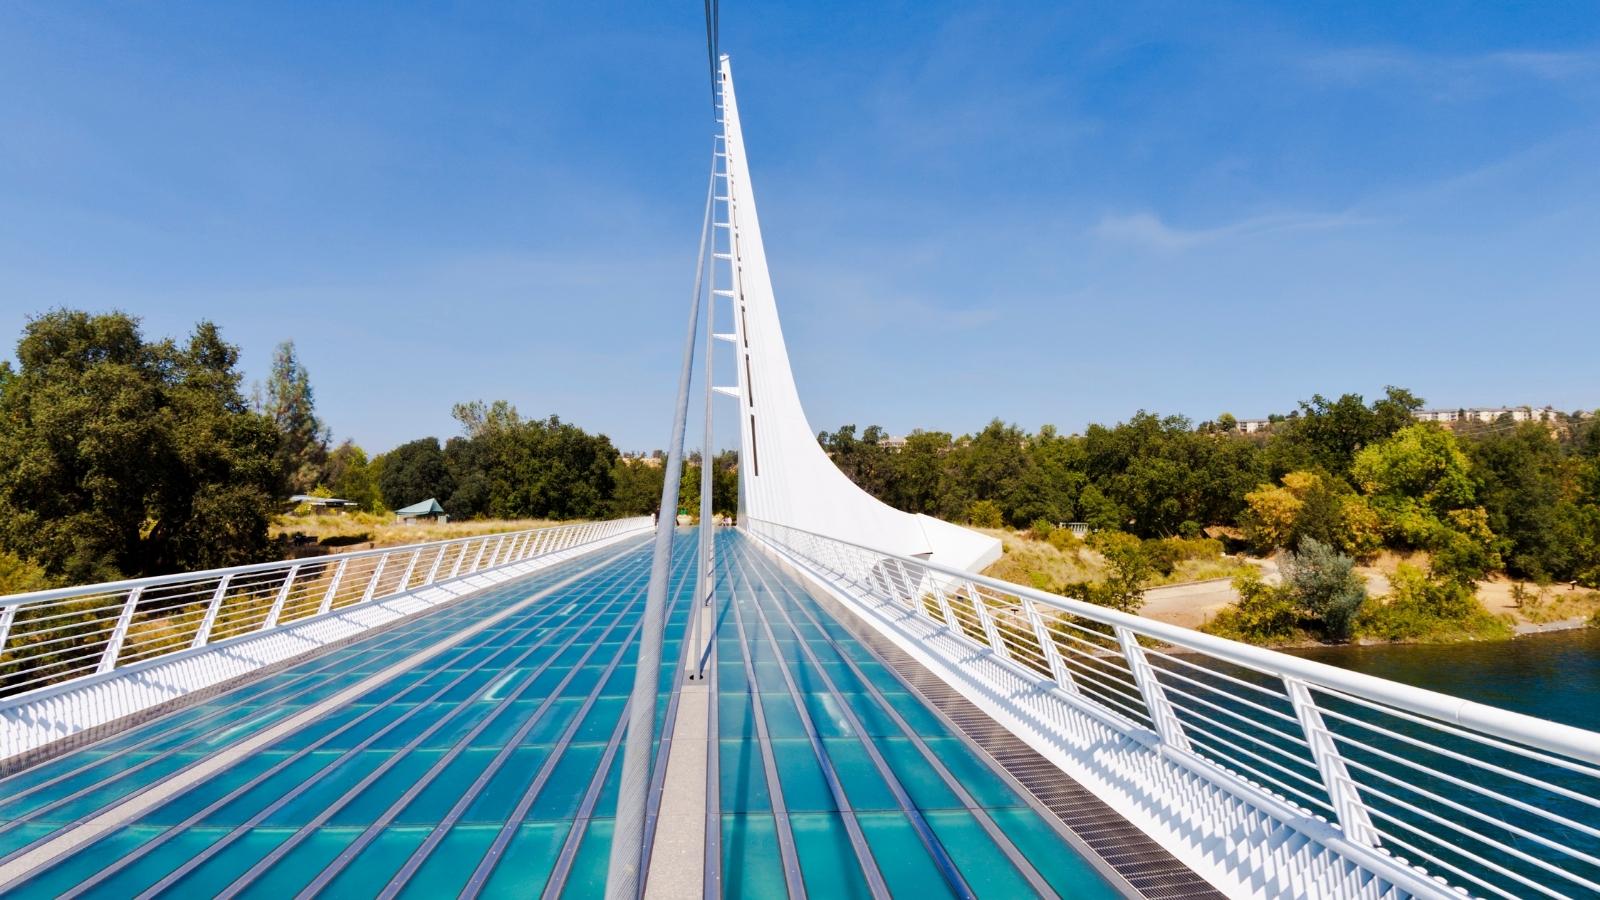 Crossing a glass bridge